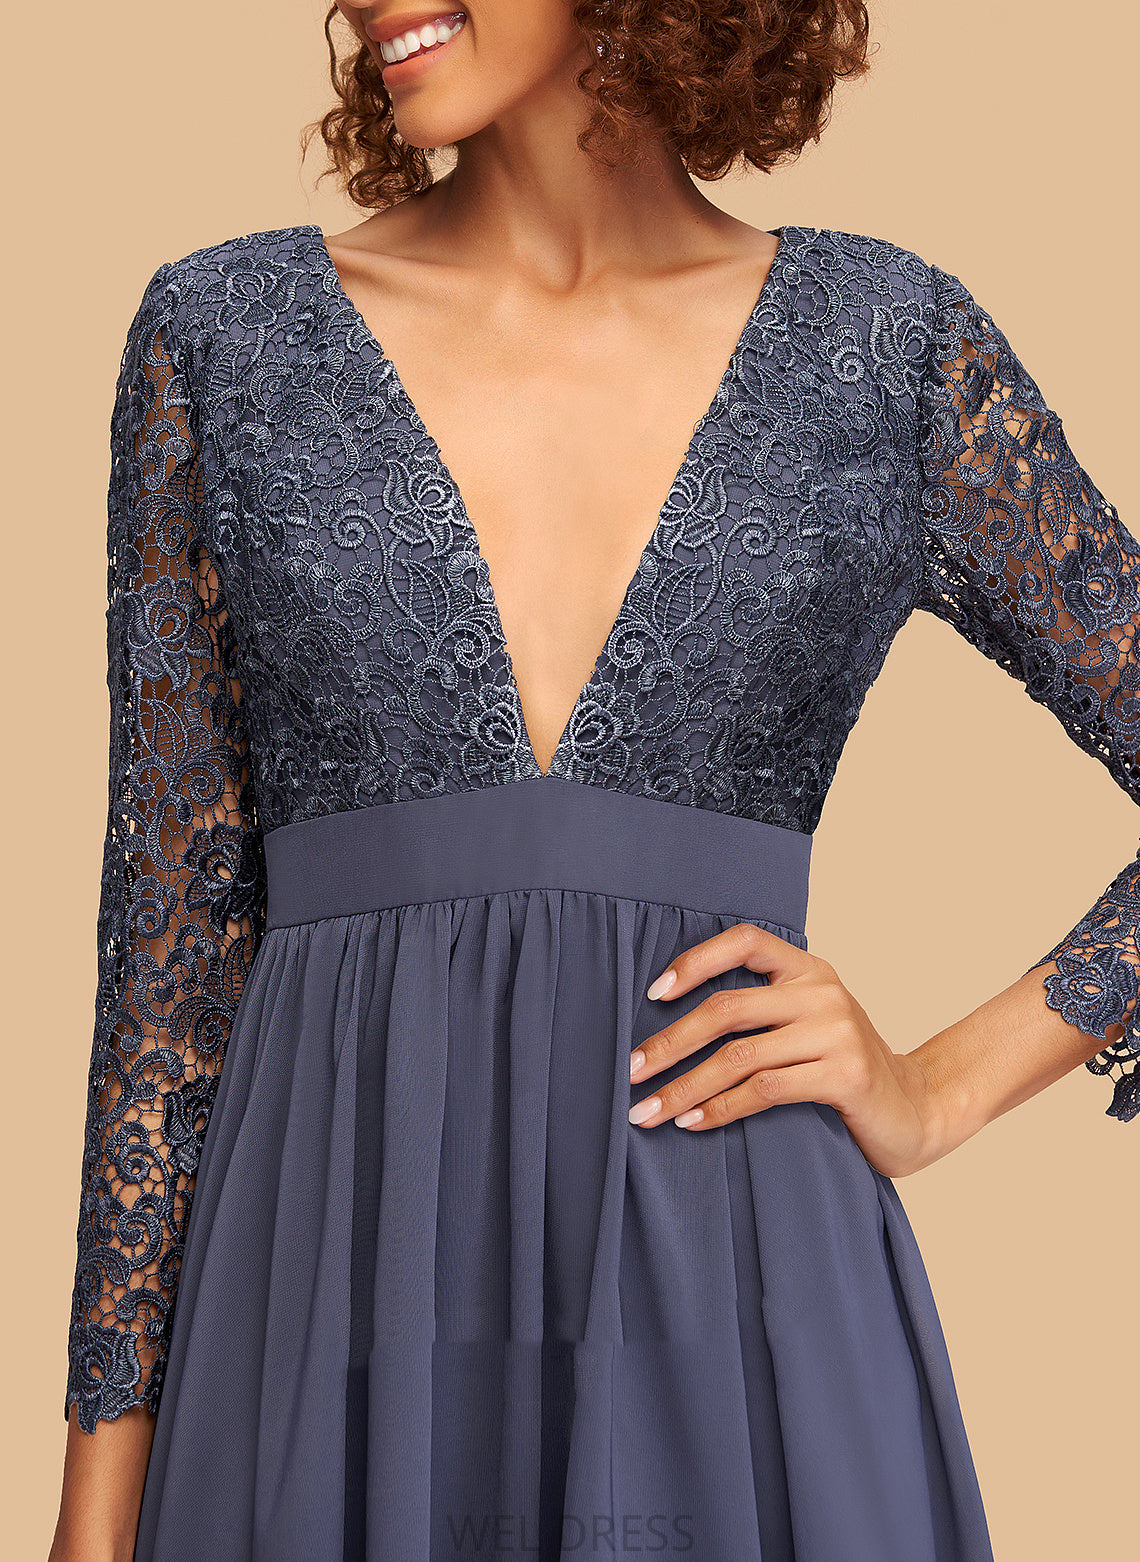 Chiffon Homecoming Short/Mini V-neck Lace Dress Homecoming Dresses With Katelynn A-Line